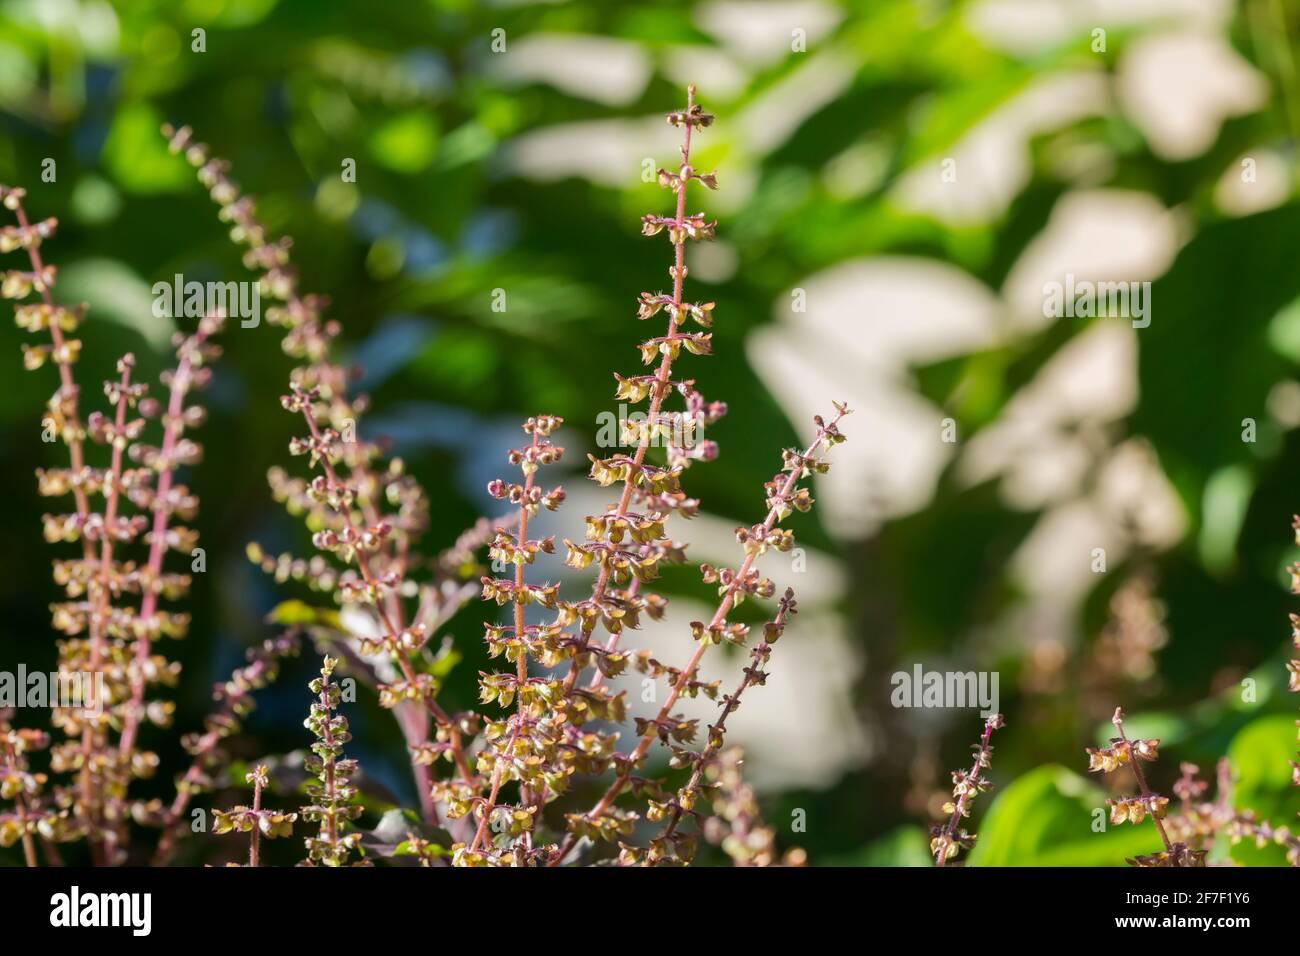 Tulsi , holy basil (Ocimum tenuiflorum) flowers in the garden. Stock Photo